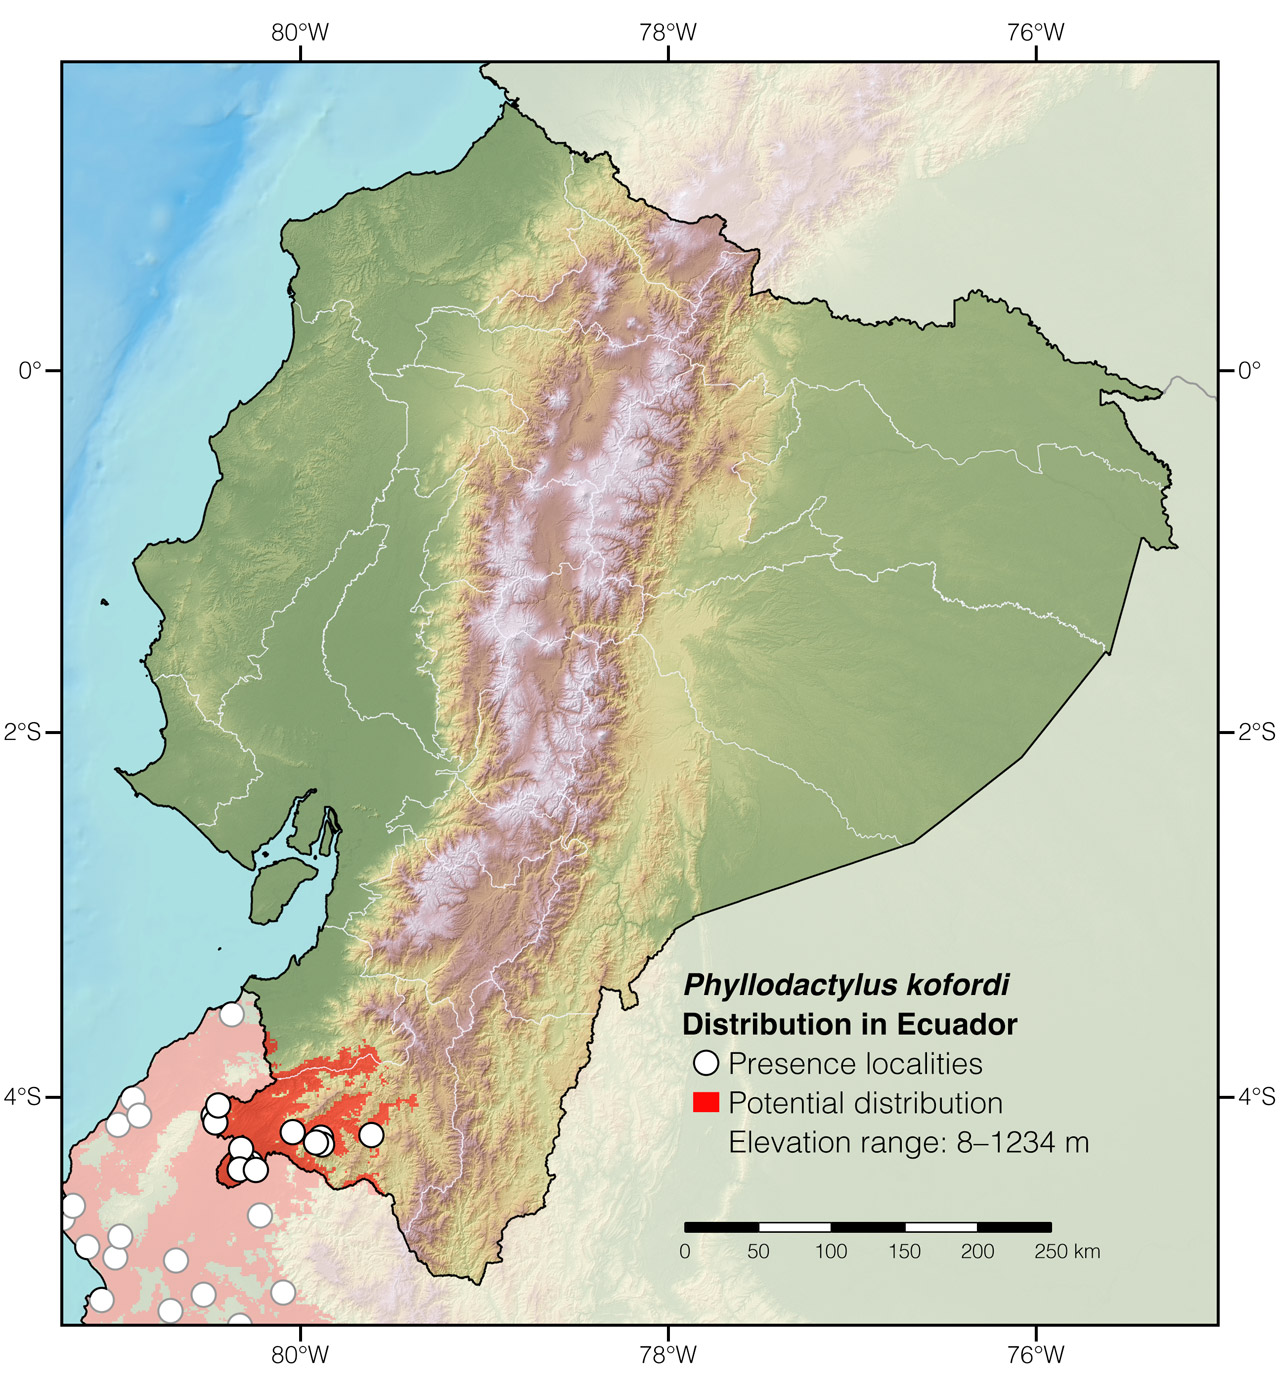 Distribution of Phyllodactylus kofordi in Ecuador